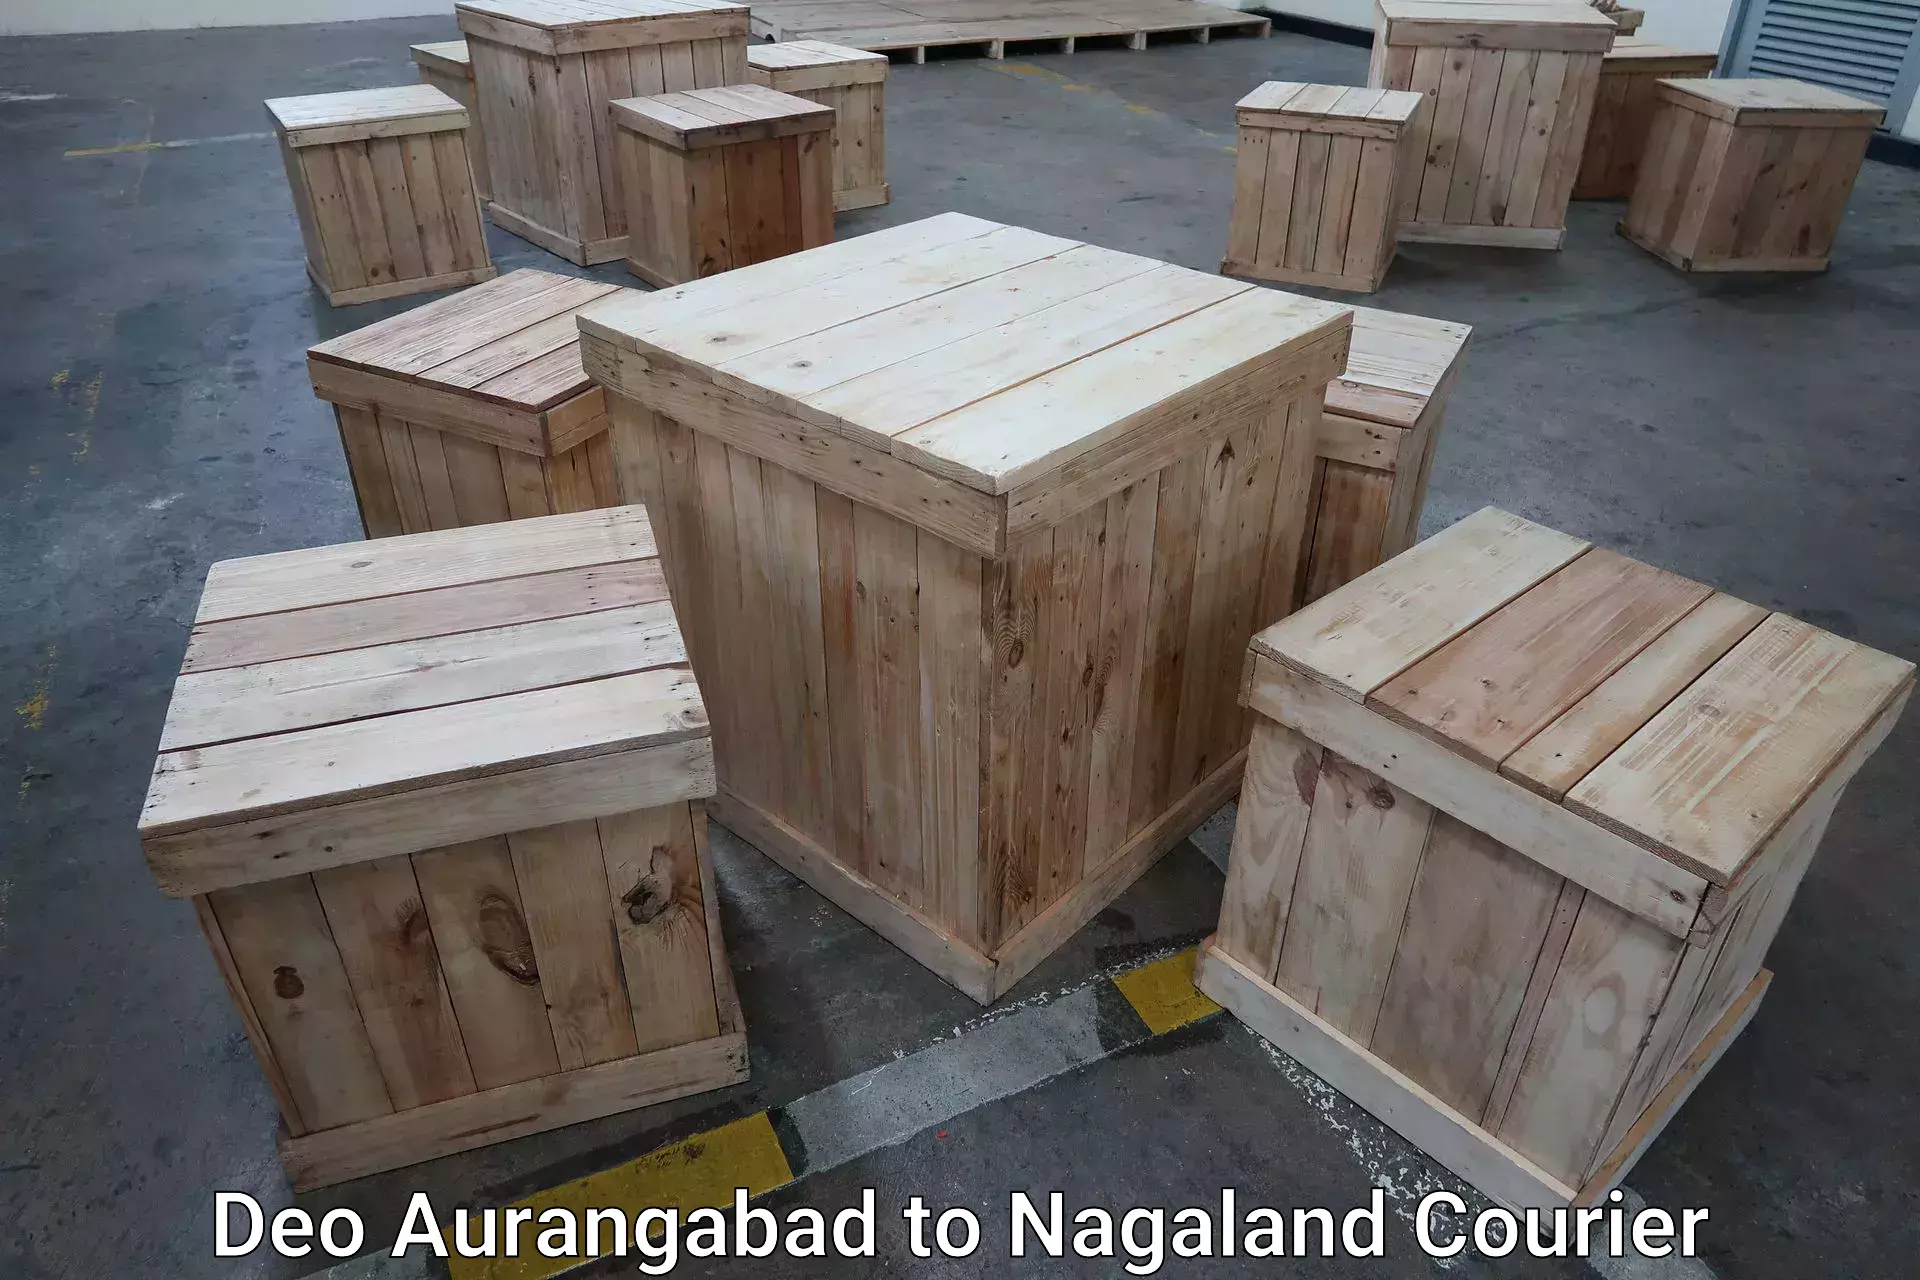 Same day luggage service Deo Aurangabad to Nagaland